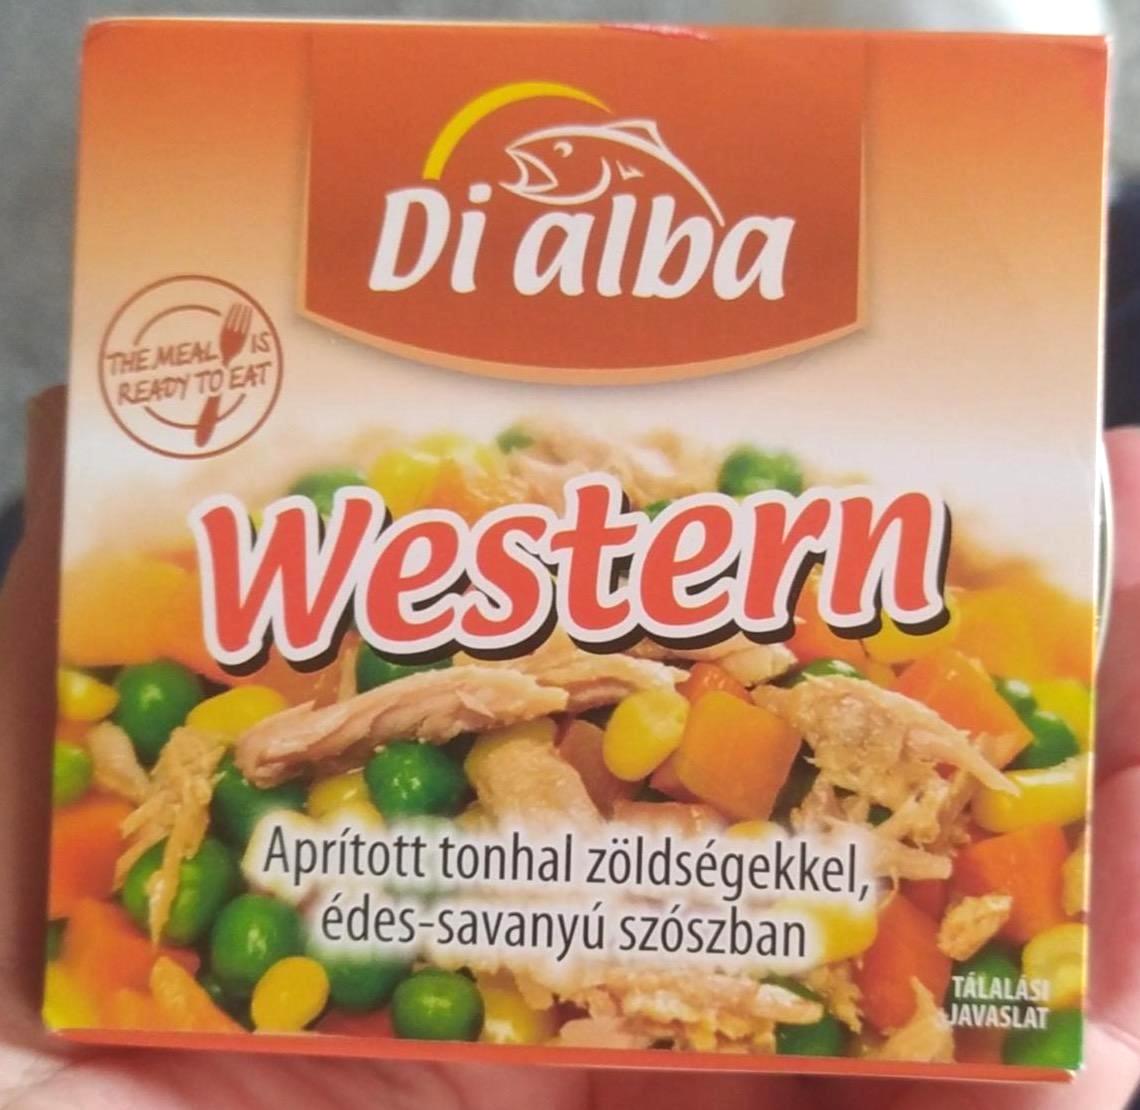 Képek - Western tonhal zöldségekkel Di Alba